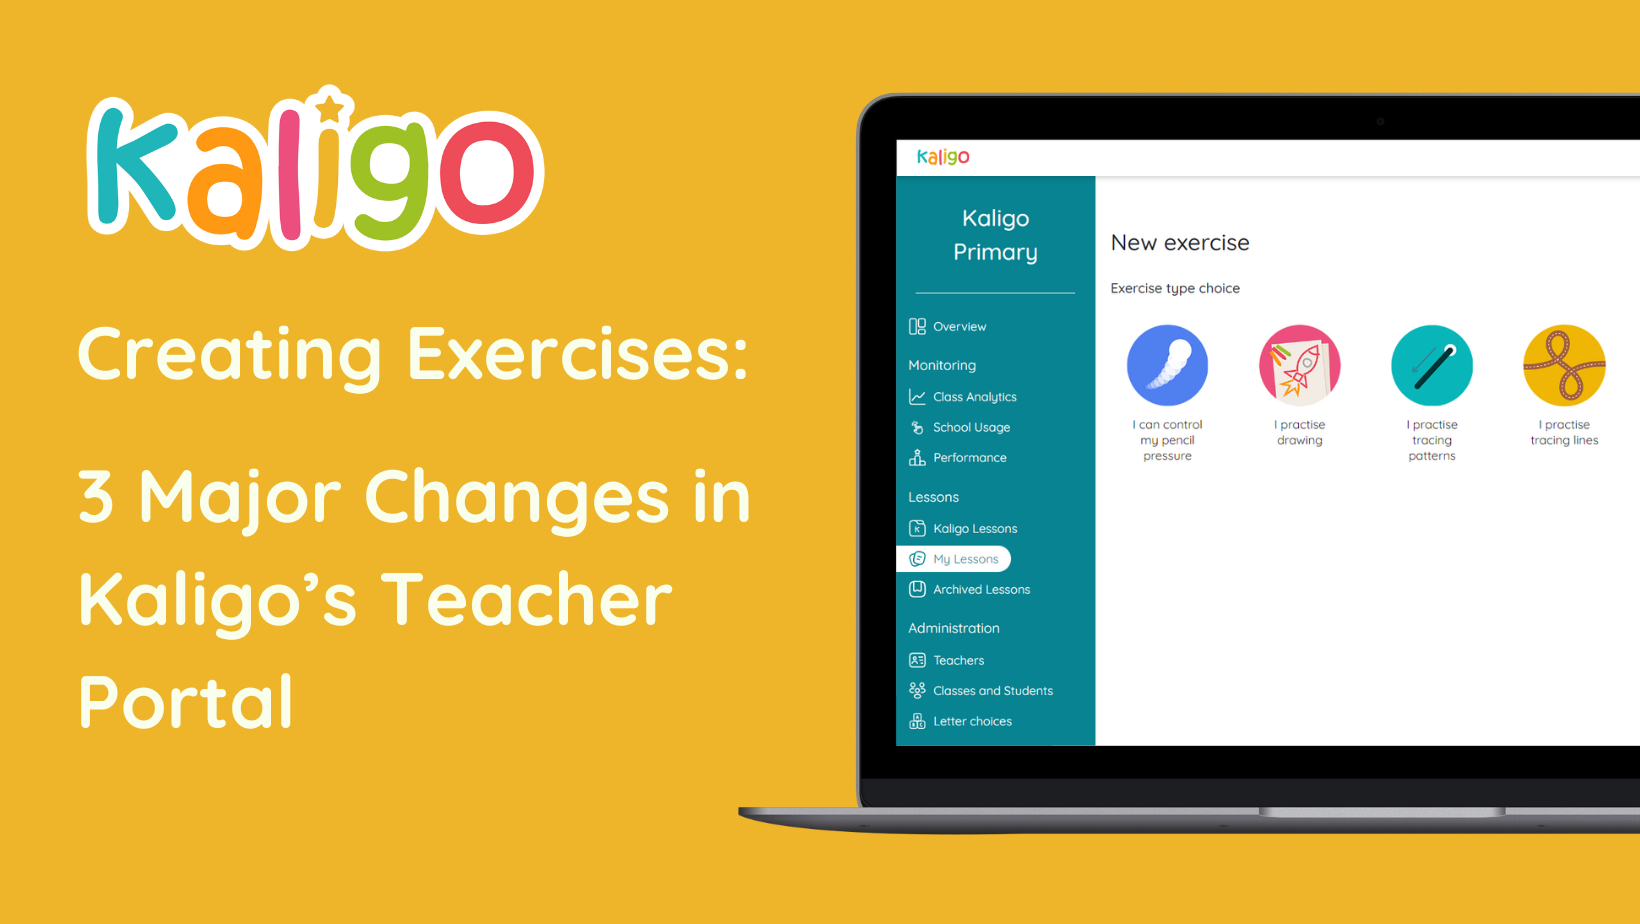 Creating exercises: 3 major changes in Kaligo's teacher portal